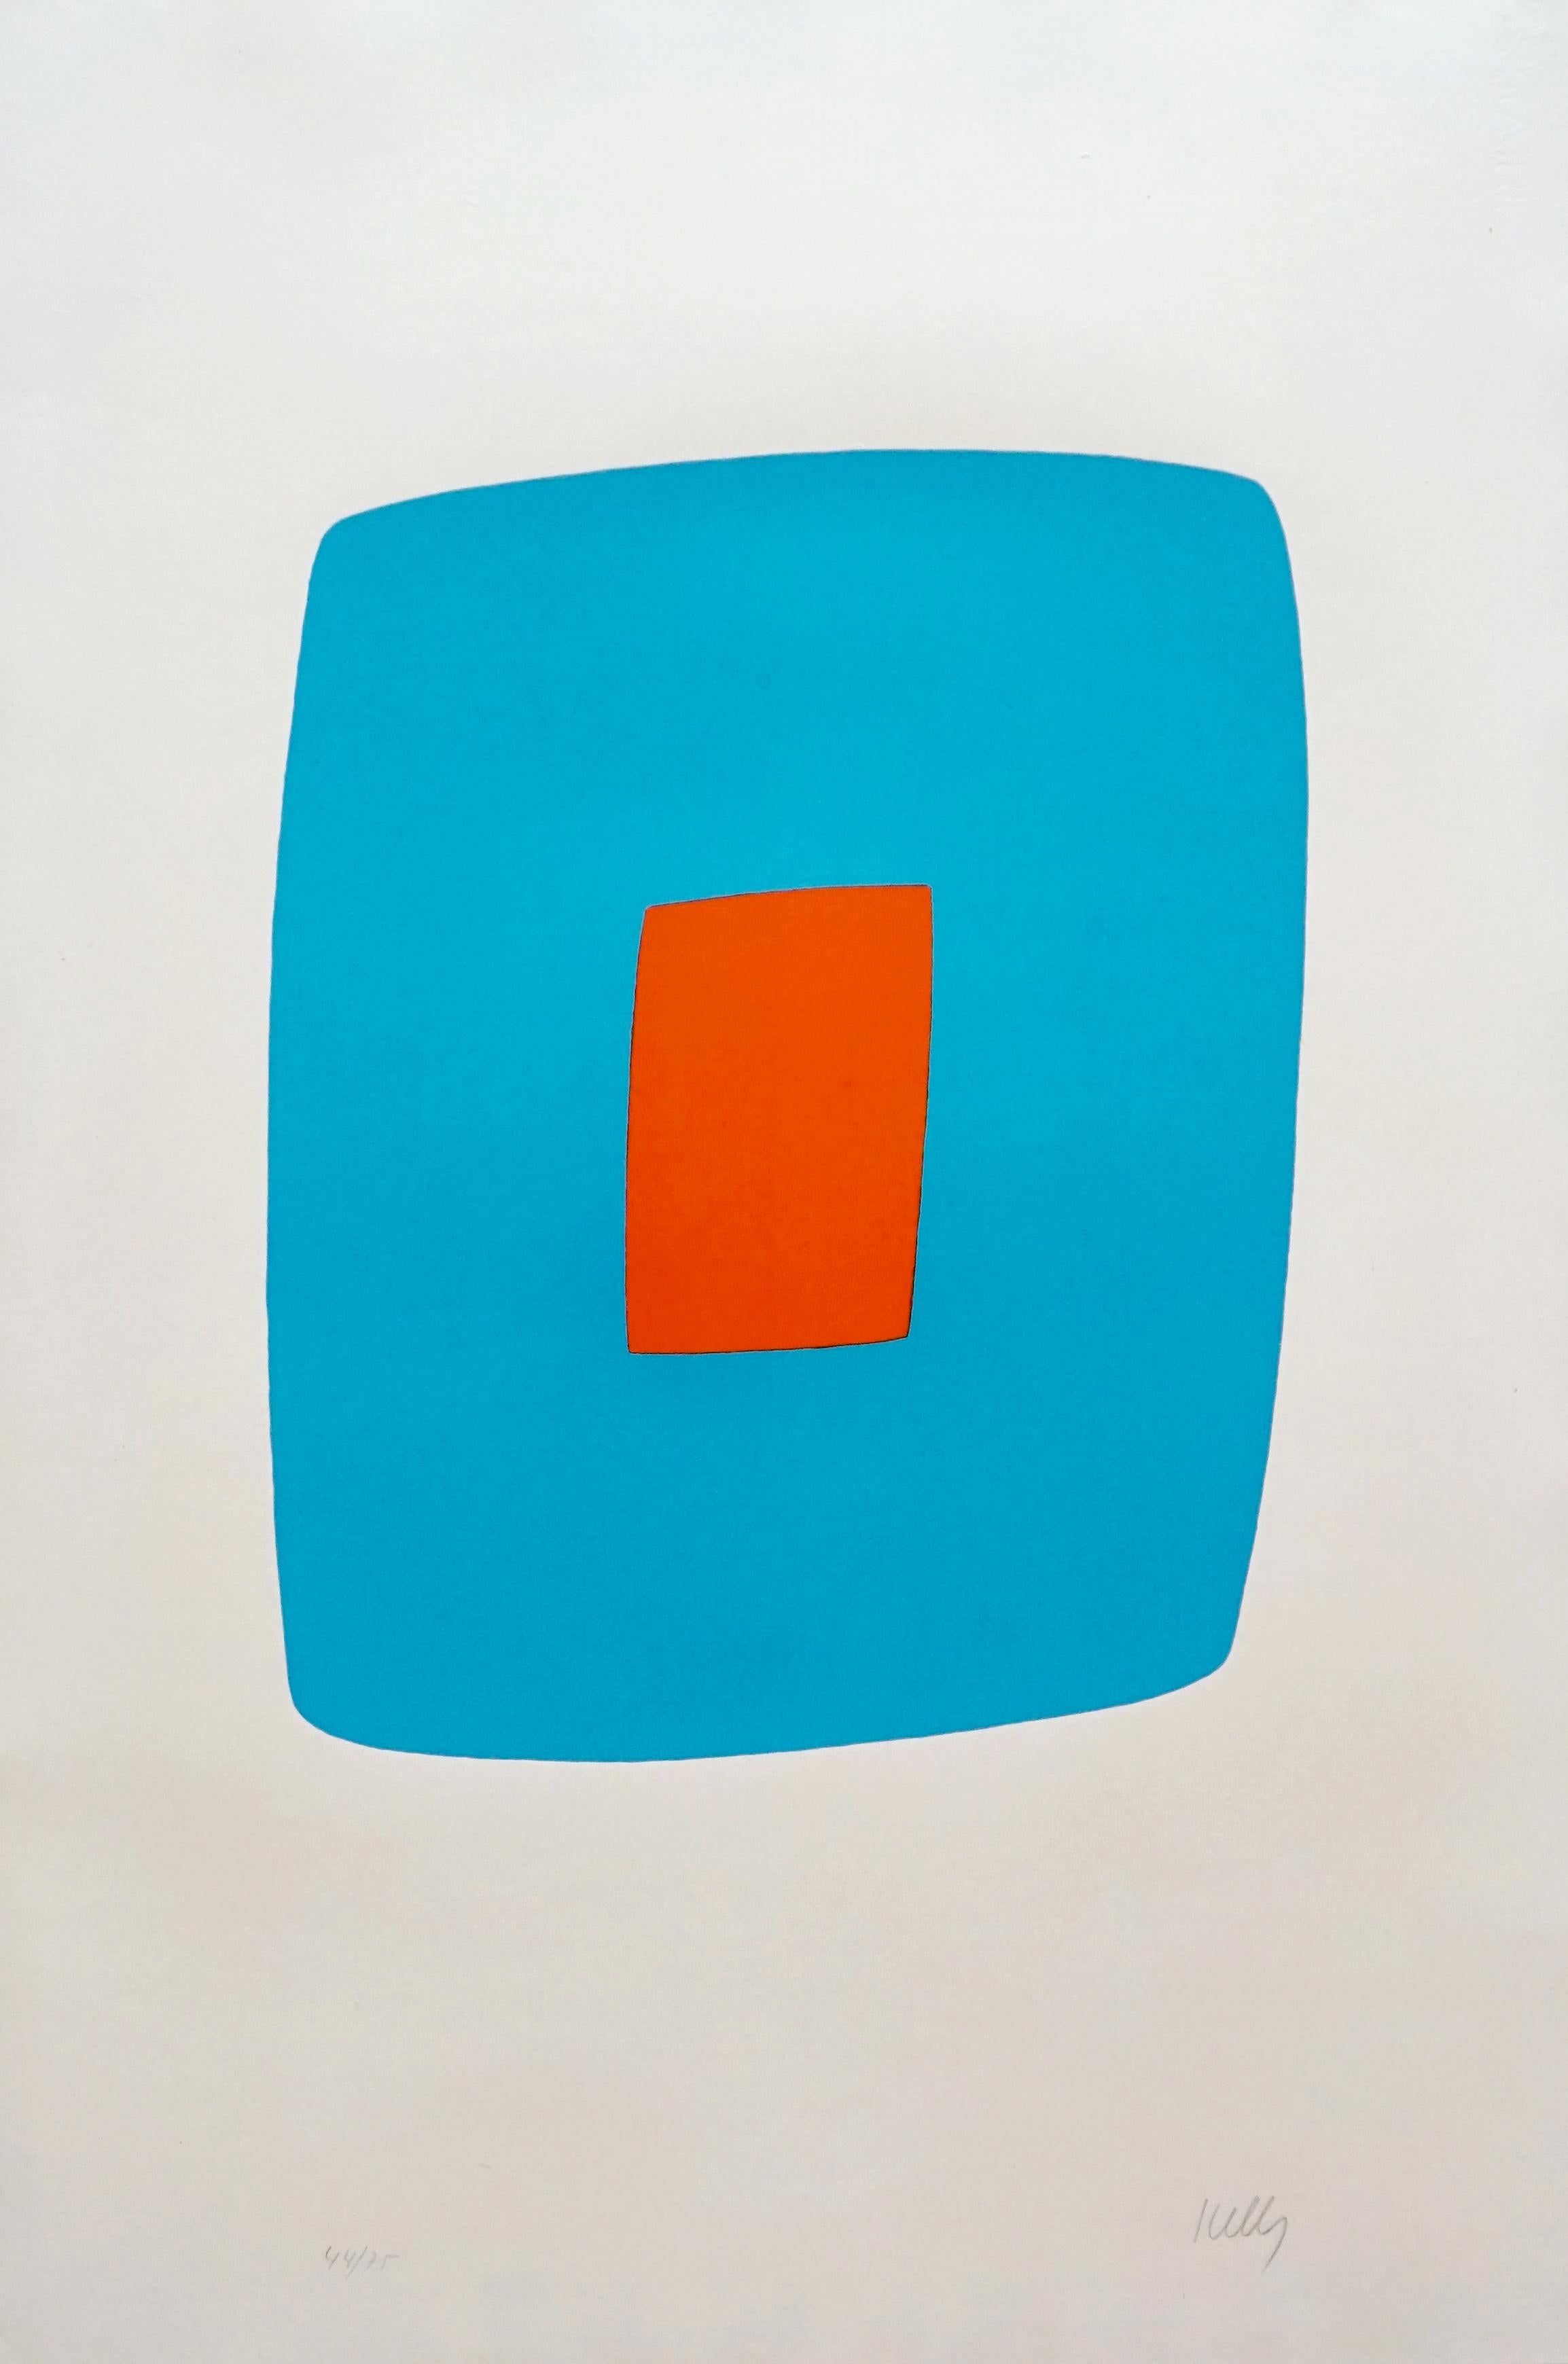 Ellsworth Kelly Abstract Print – Hellblau mit Orange (Bleu clair avec orange) VI.11